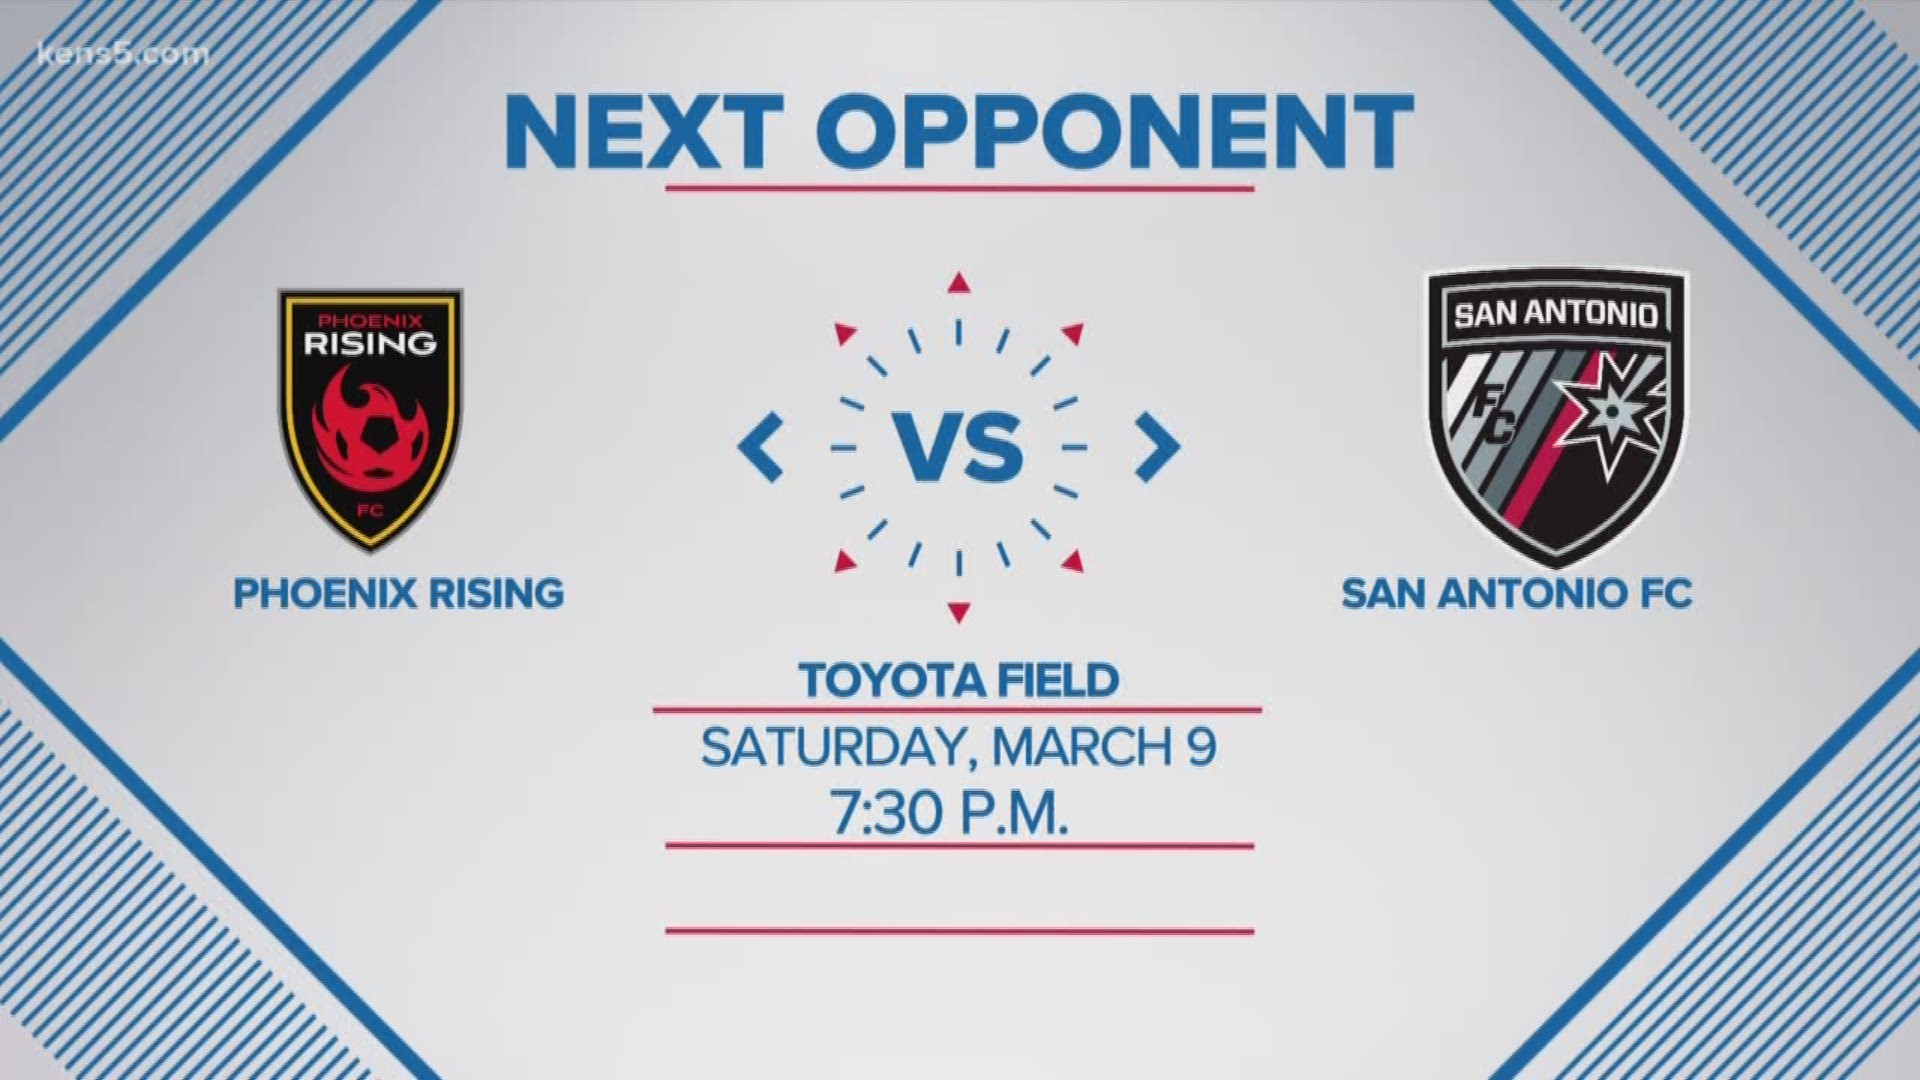 San Antonio FC will take on Pheonix Rising at Toyota Field for the team's 2019 season opener.